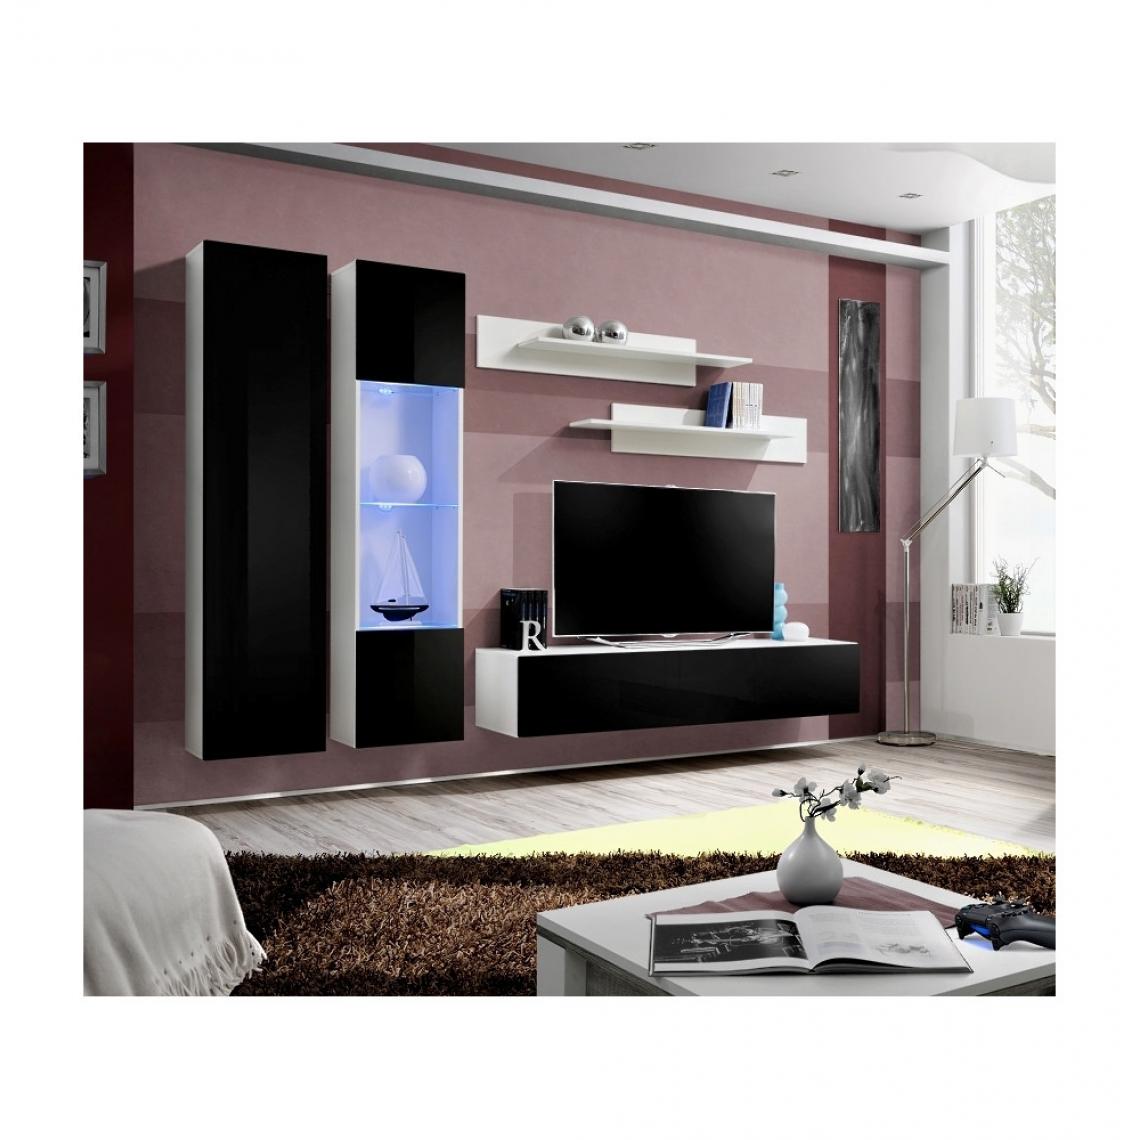 Ac-Deco - Ensemble meuble TV mural - Fly IV - 260 cm x 190 cm x 40 cm - Blanc et noir - Meubles TV, Hi-Fi